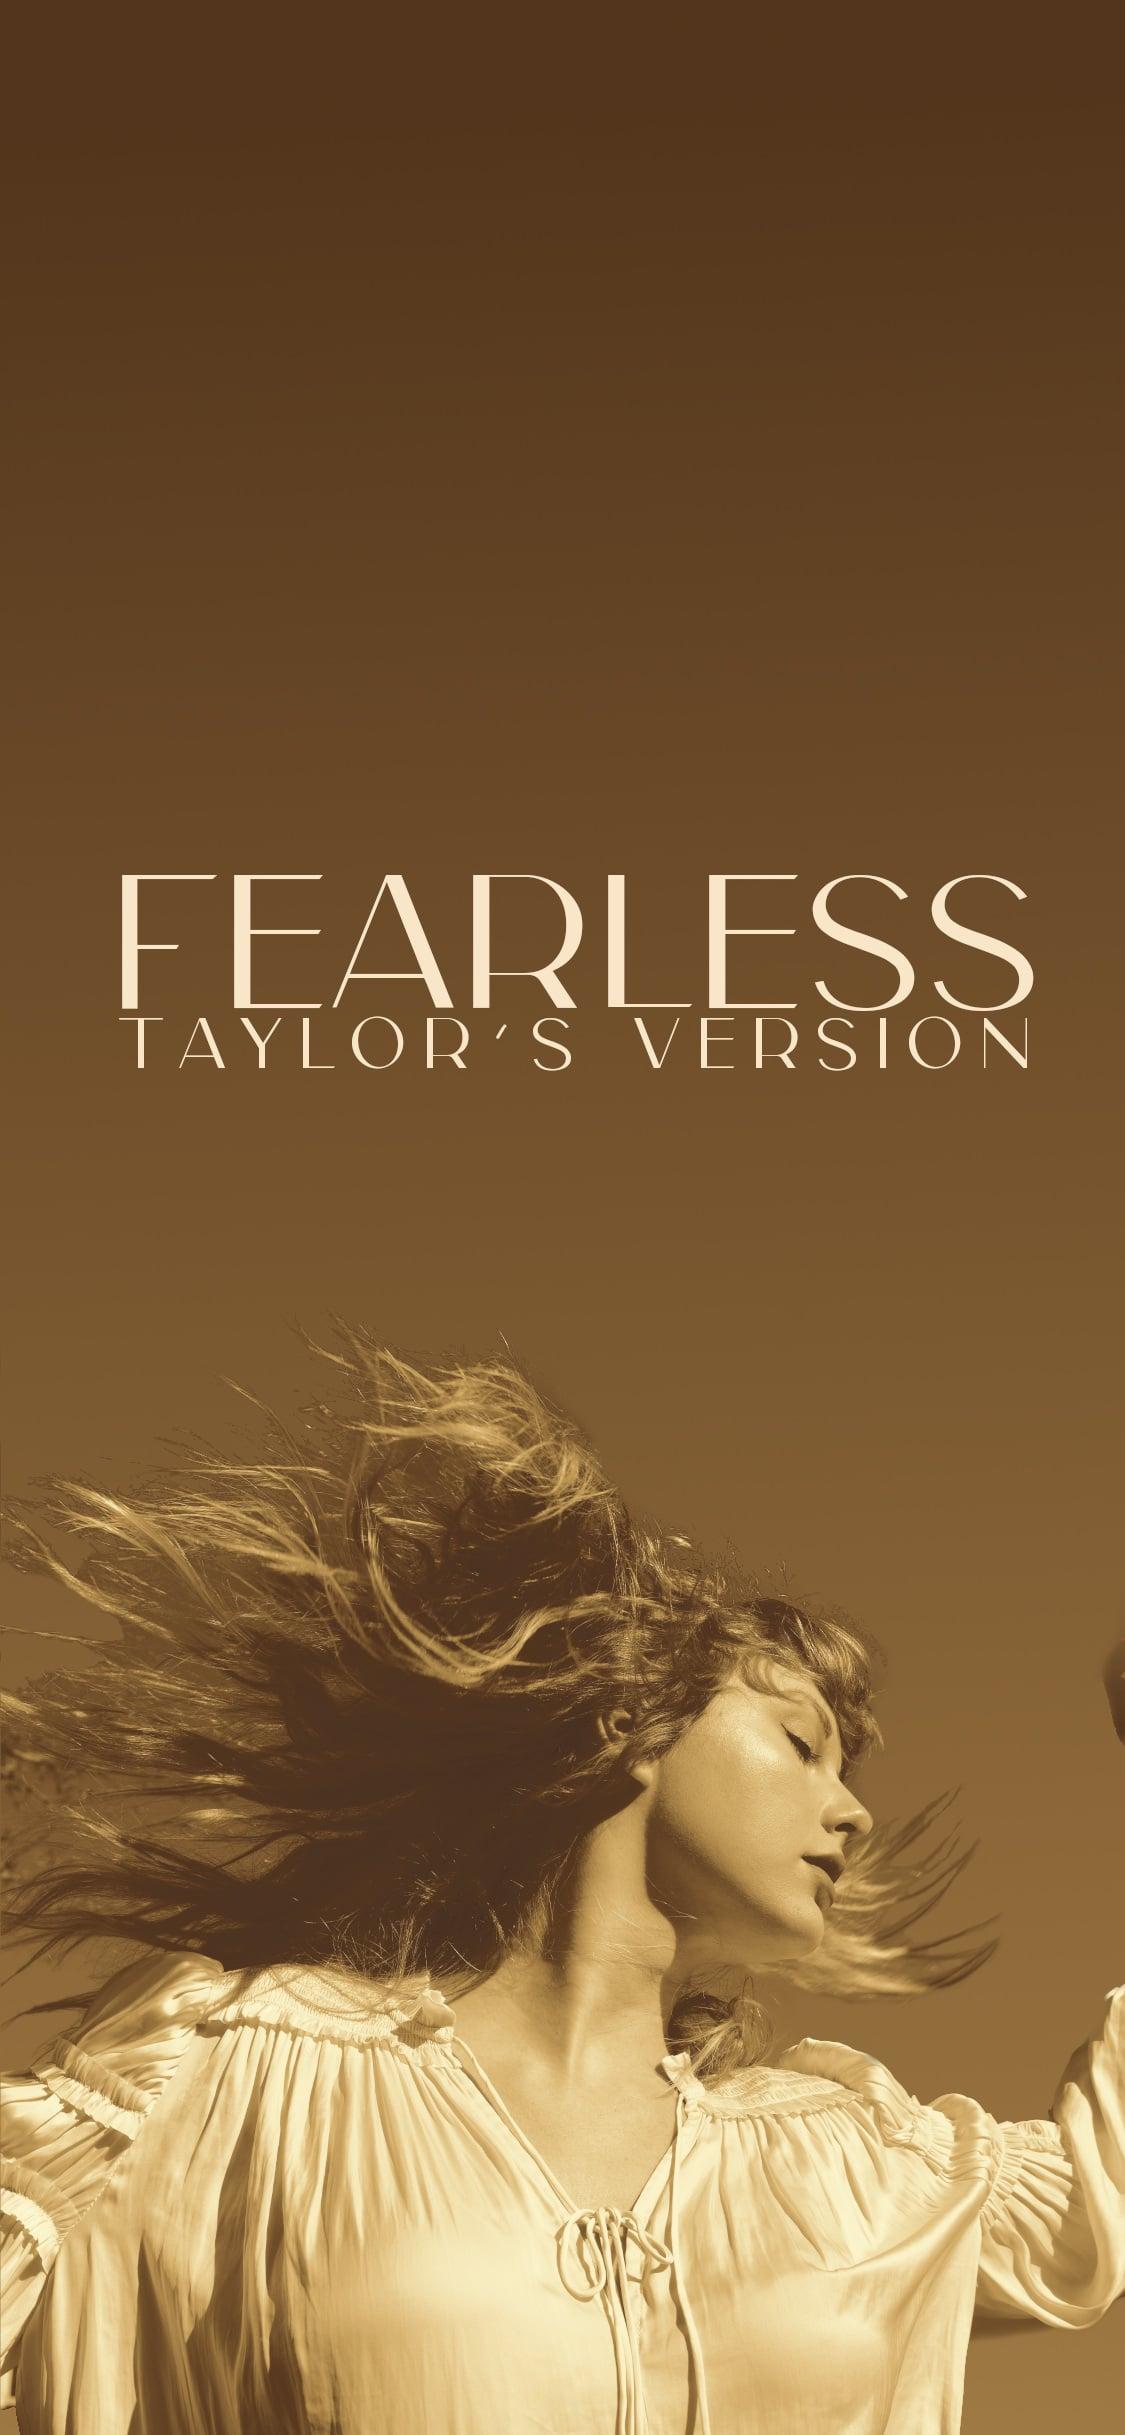 [49+] Fearless Taylor Swift Computer Wallpapers | WallpaperSafari